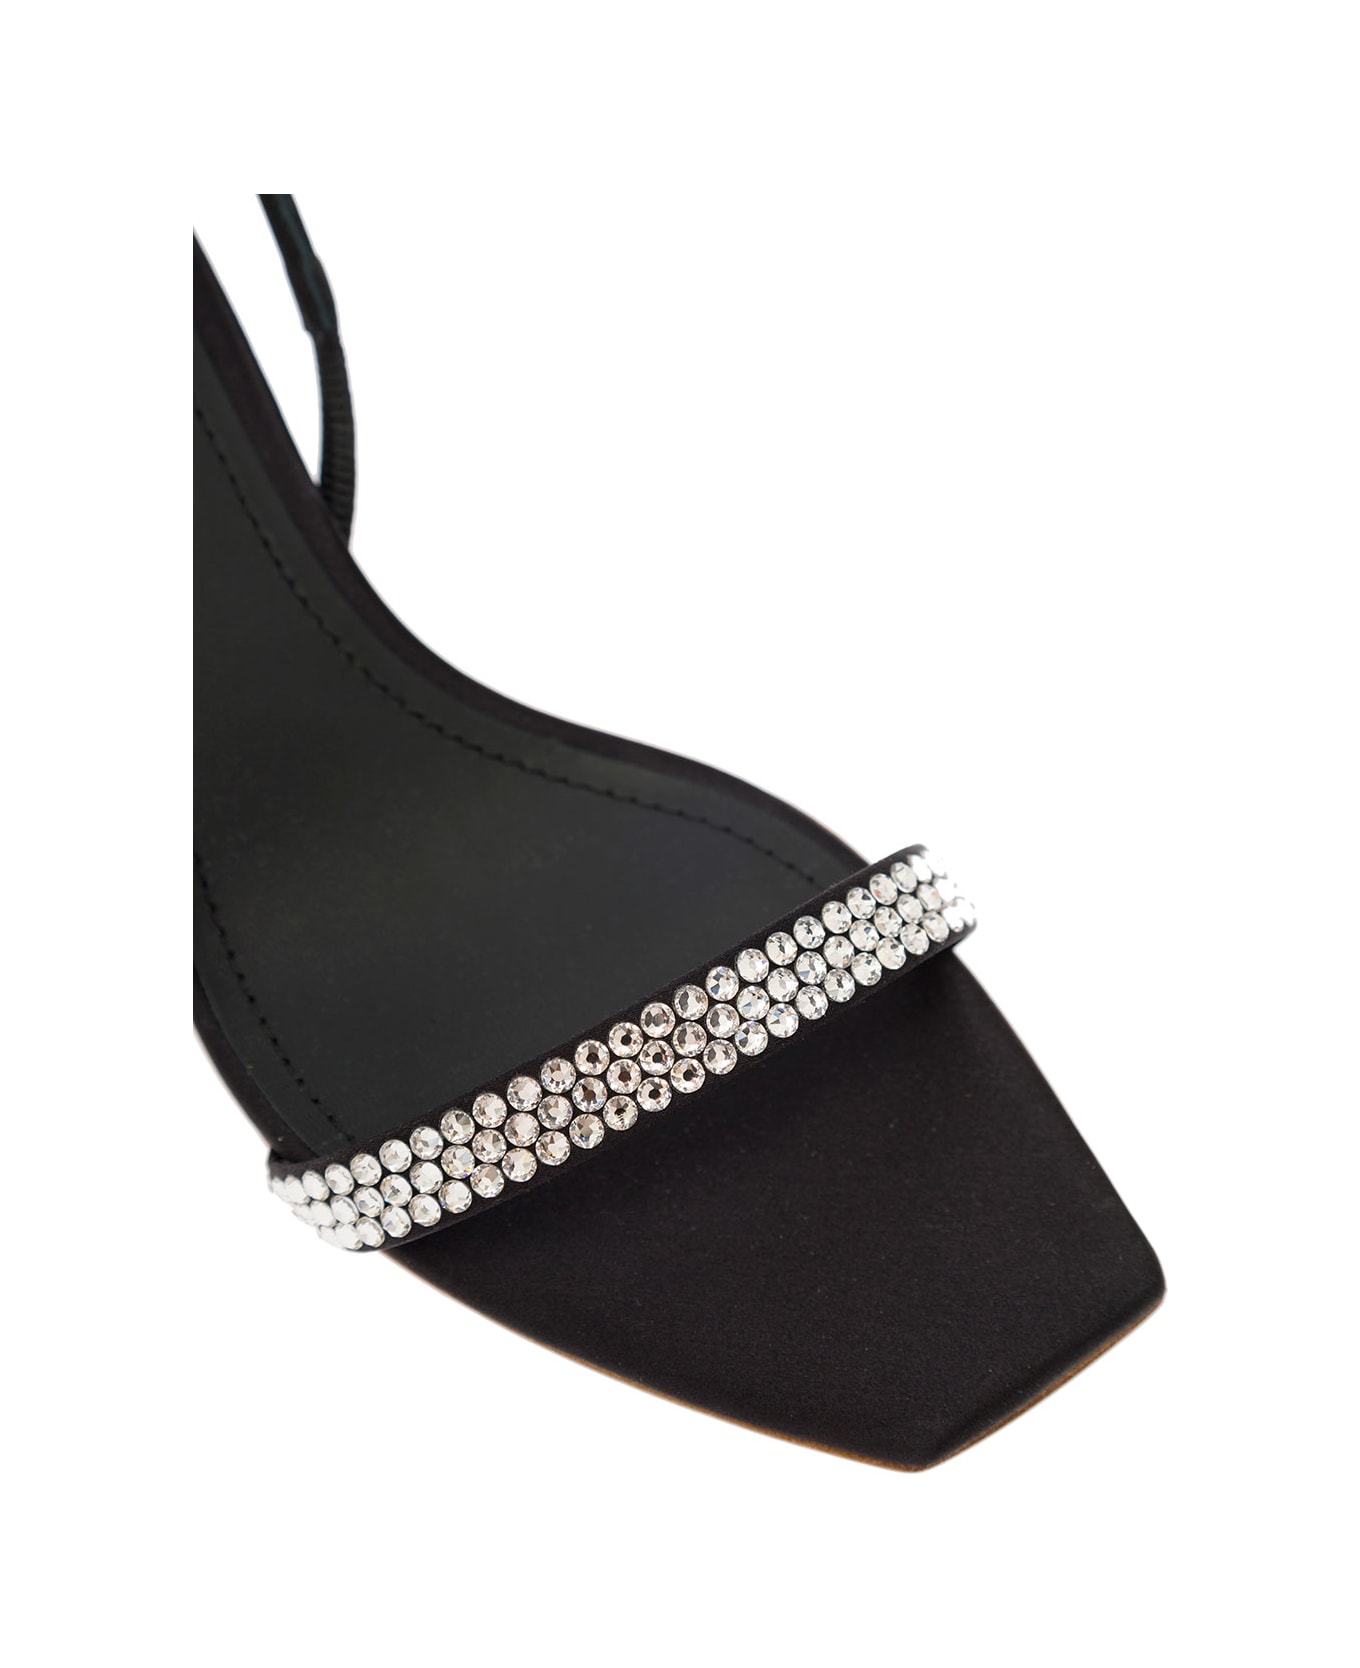 3JUIN 'eloise' Black Sandals With Rhinestone Embellishment And Spool Heel In Viscose Blend Woman - Black